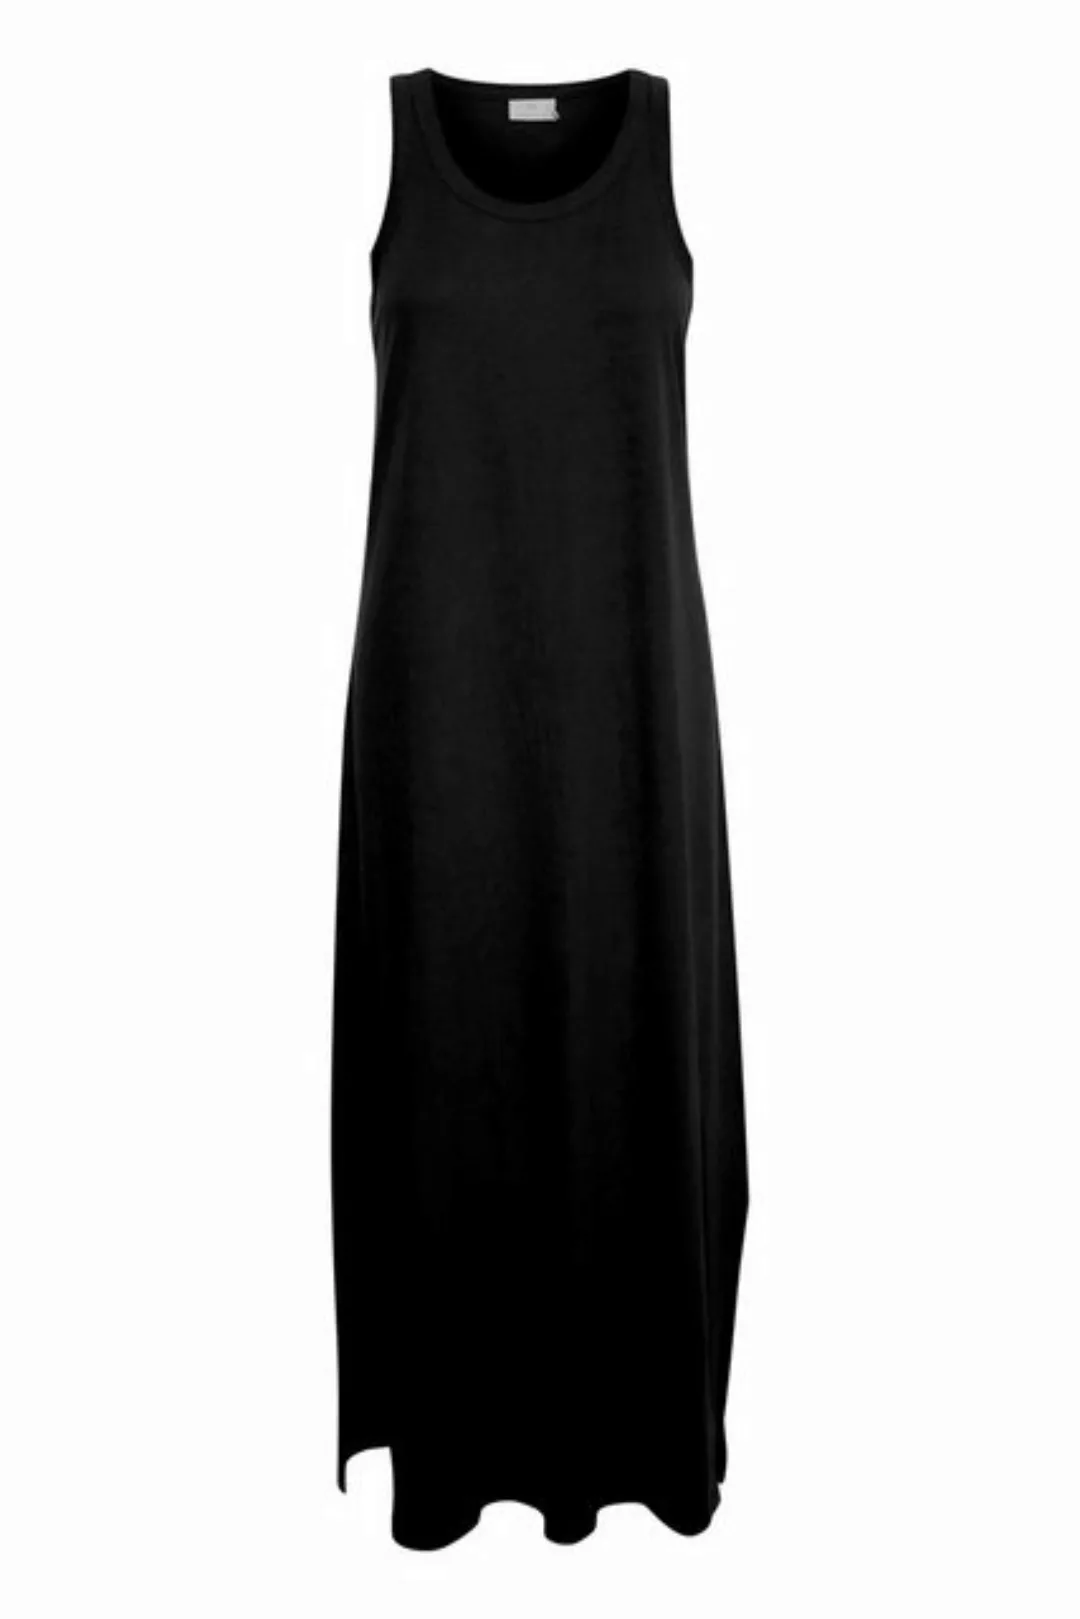 KAFFE Strickkleid Kleid KAditte günstig online kaufen